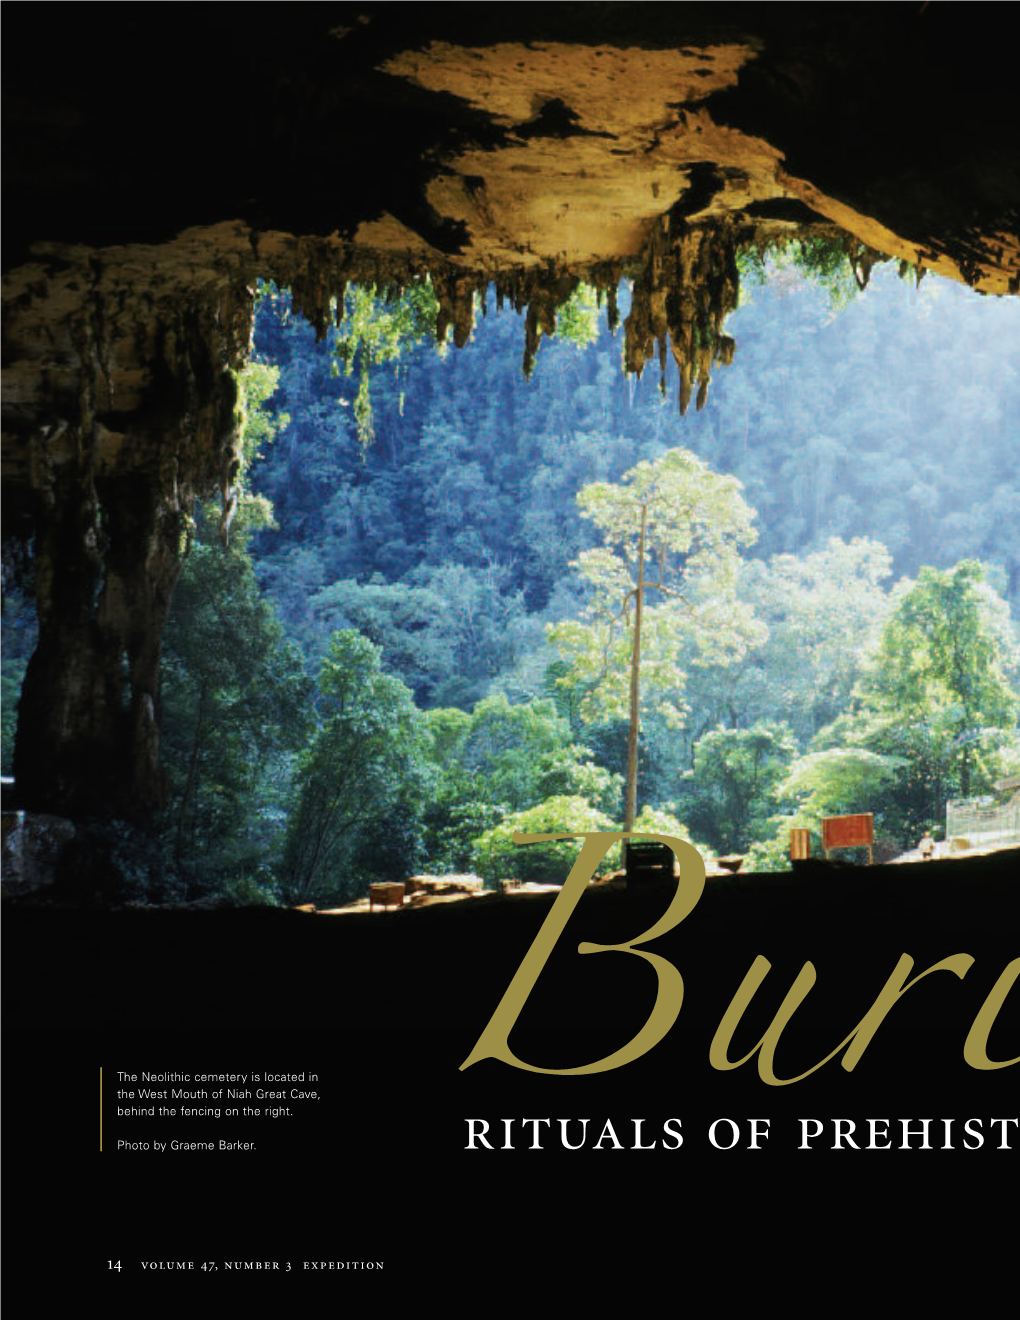 Burial Rituals of Prehistoric Forager-Farmers in Borneo